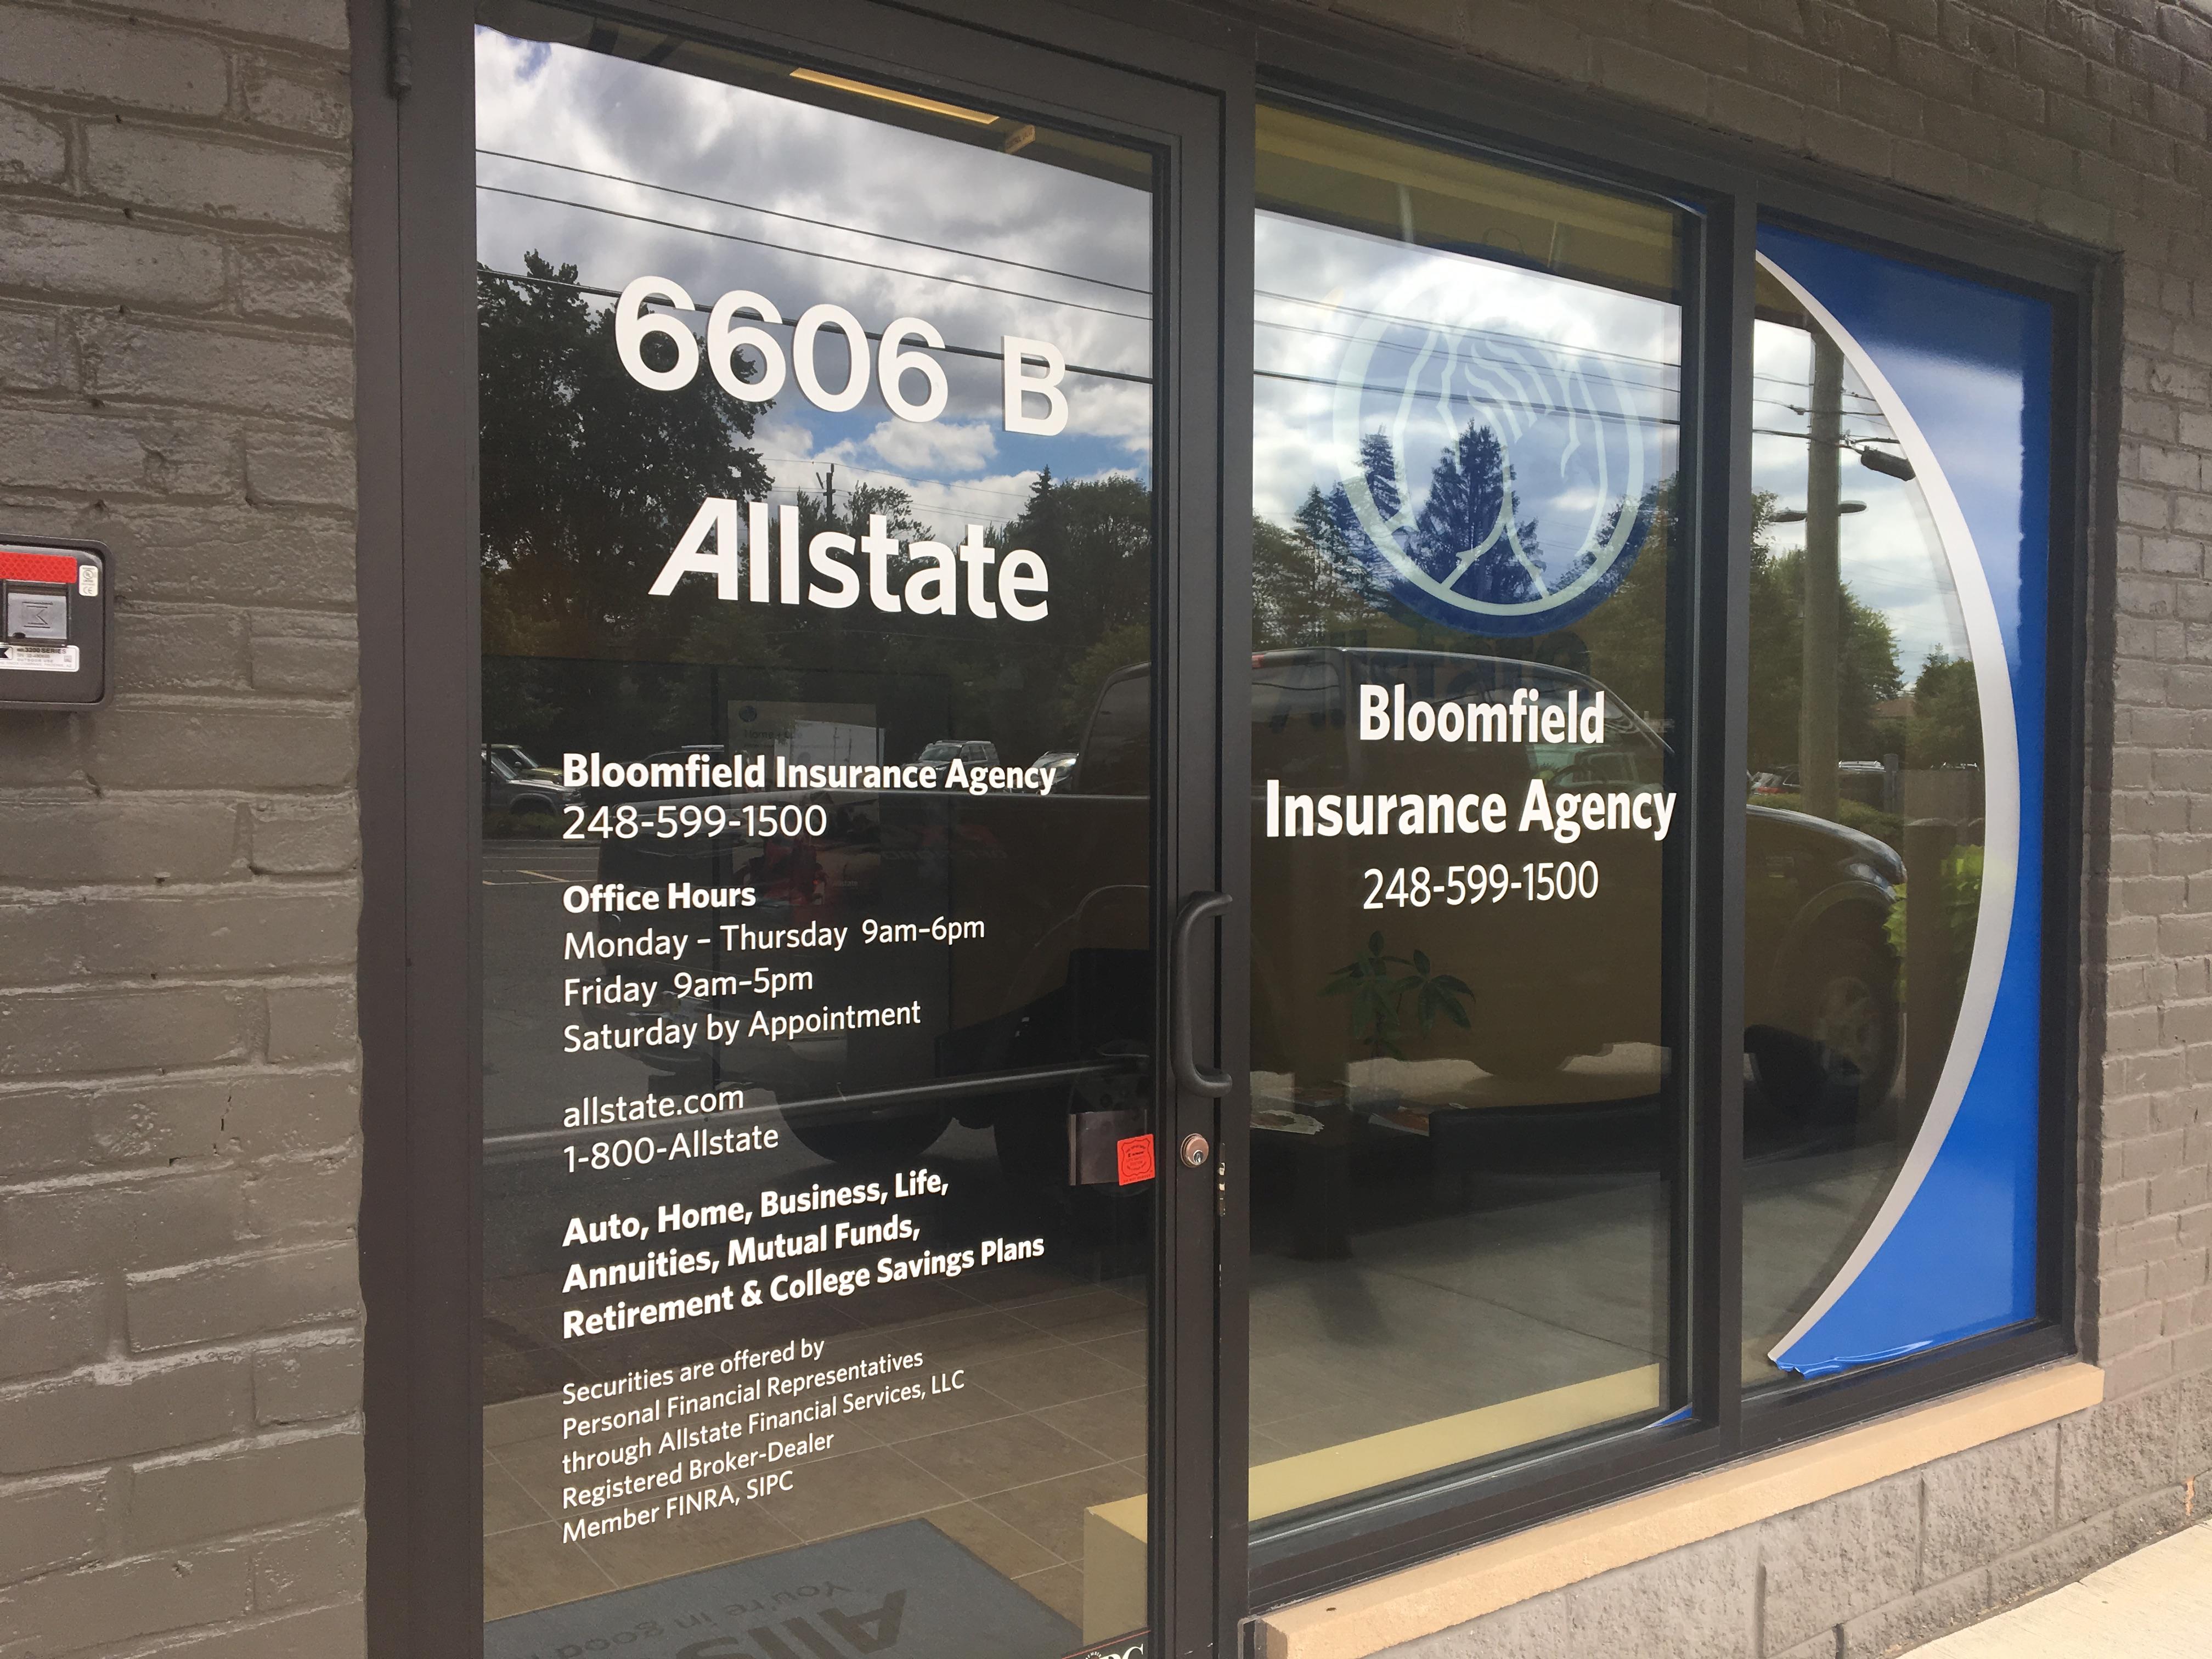 Joel Schembri: Allstate Insurance. 